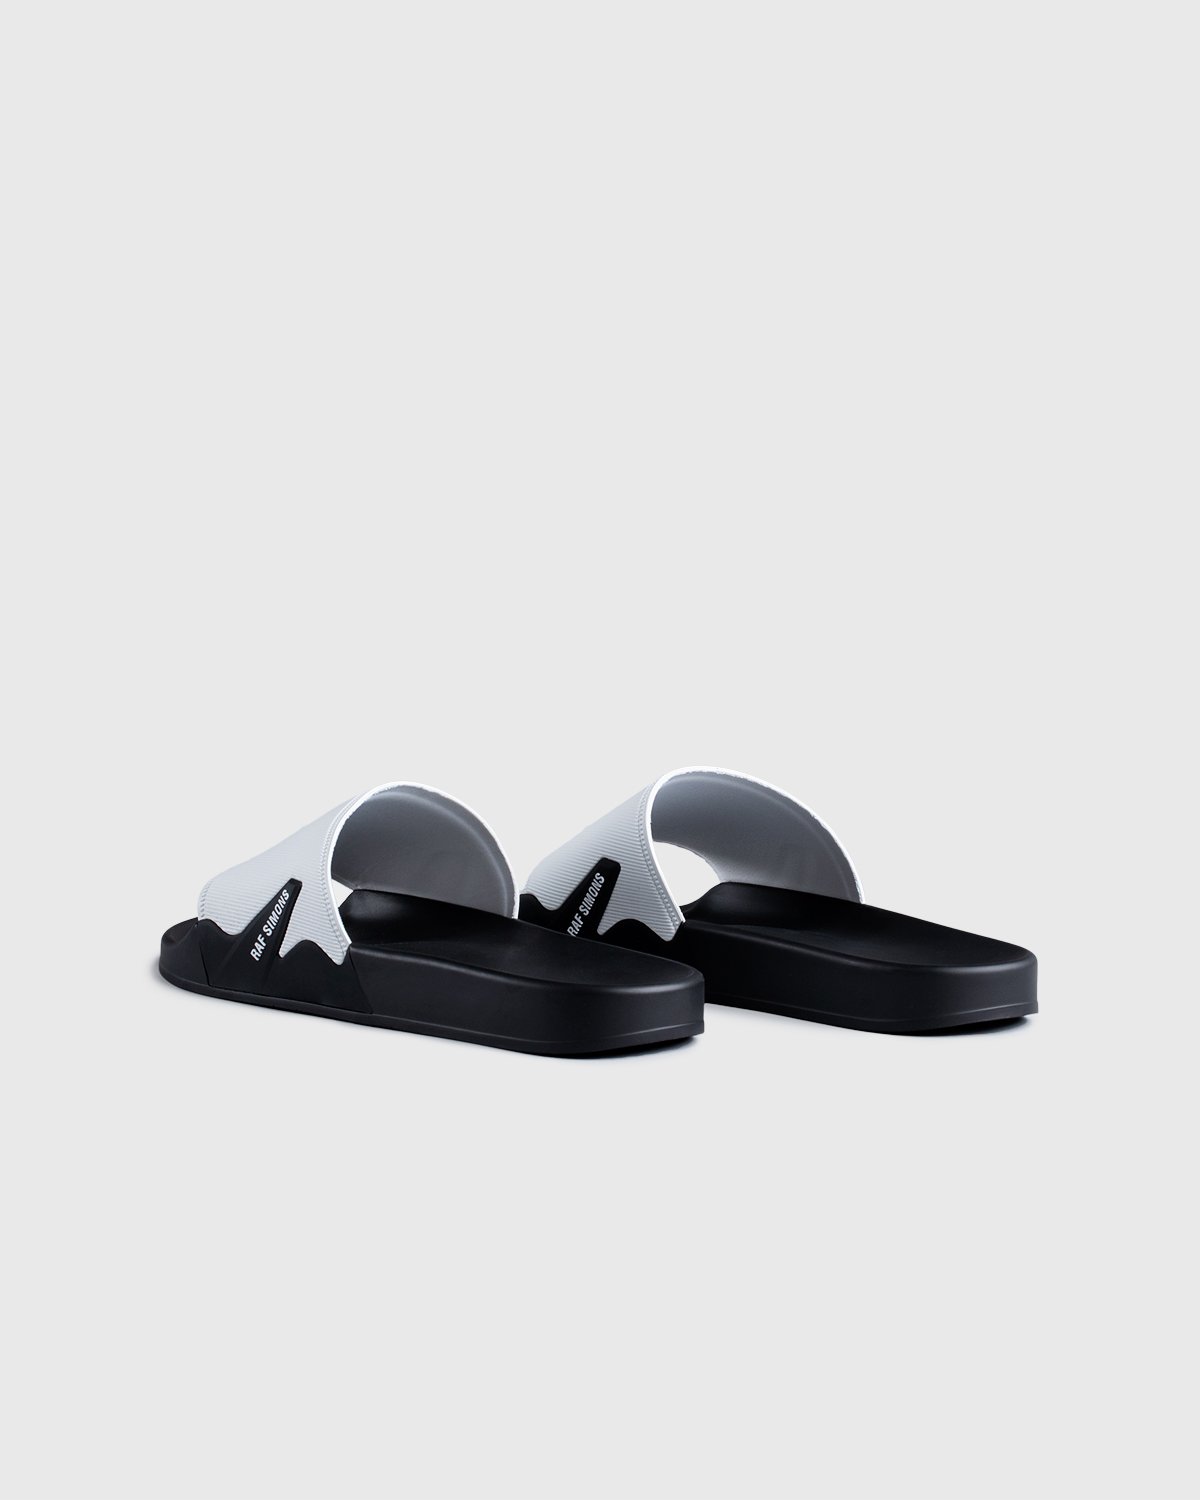 Raf Simons - Astra White/Black - Footwear - White - Image 4